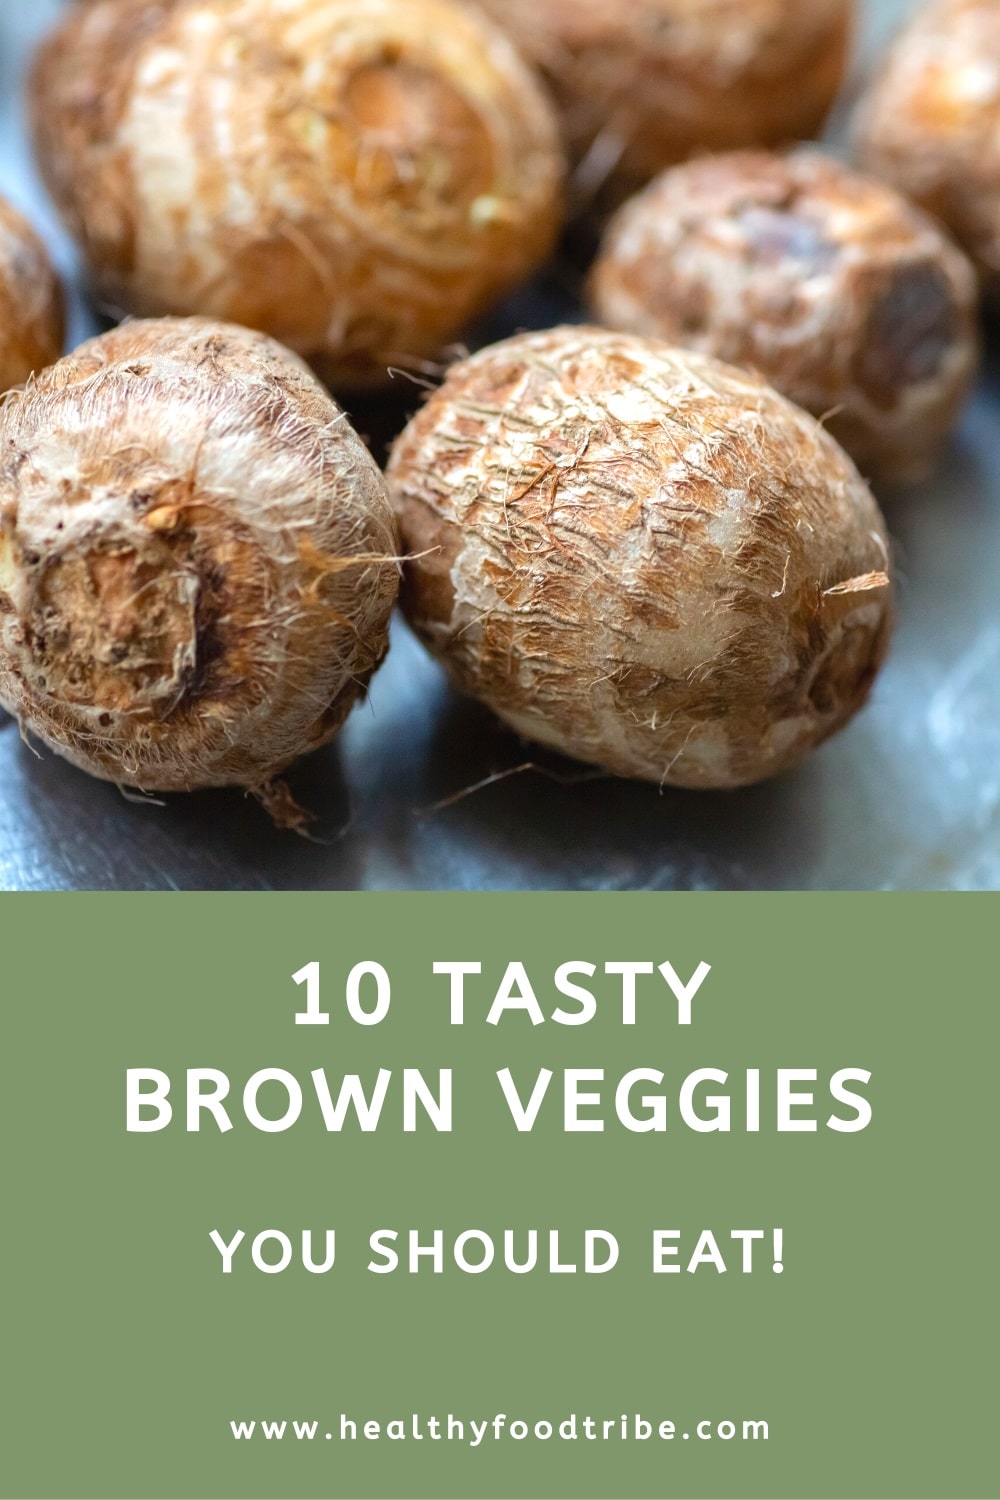 10 Brown veggies you should eat